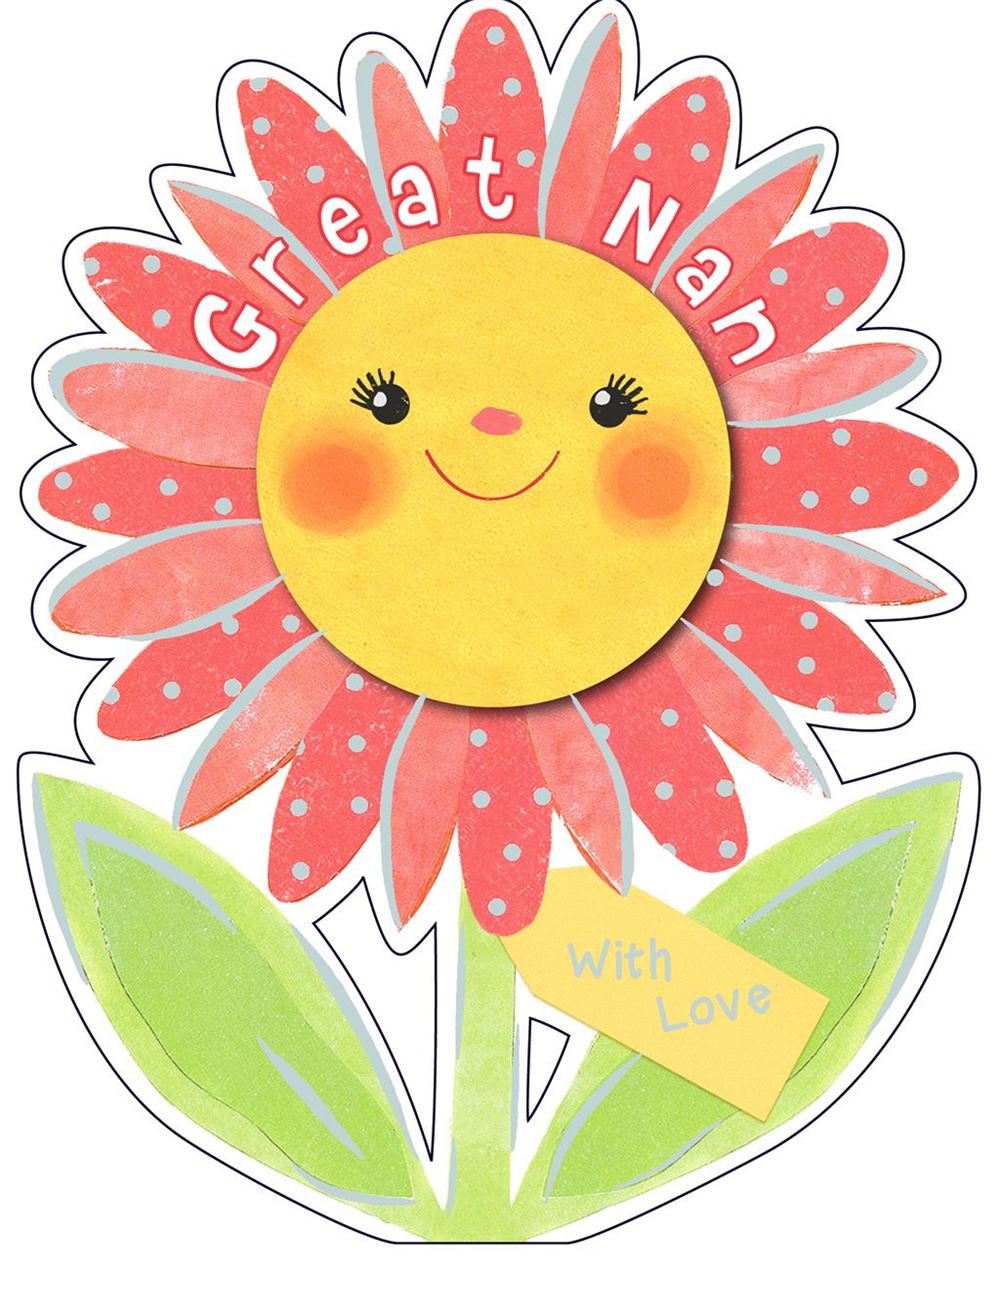 Great Nan With Love Birthday Card - Cute Sunflower